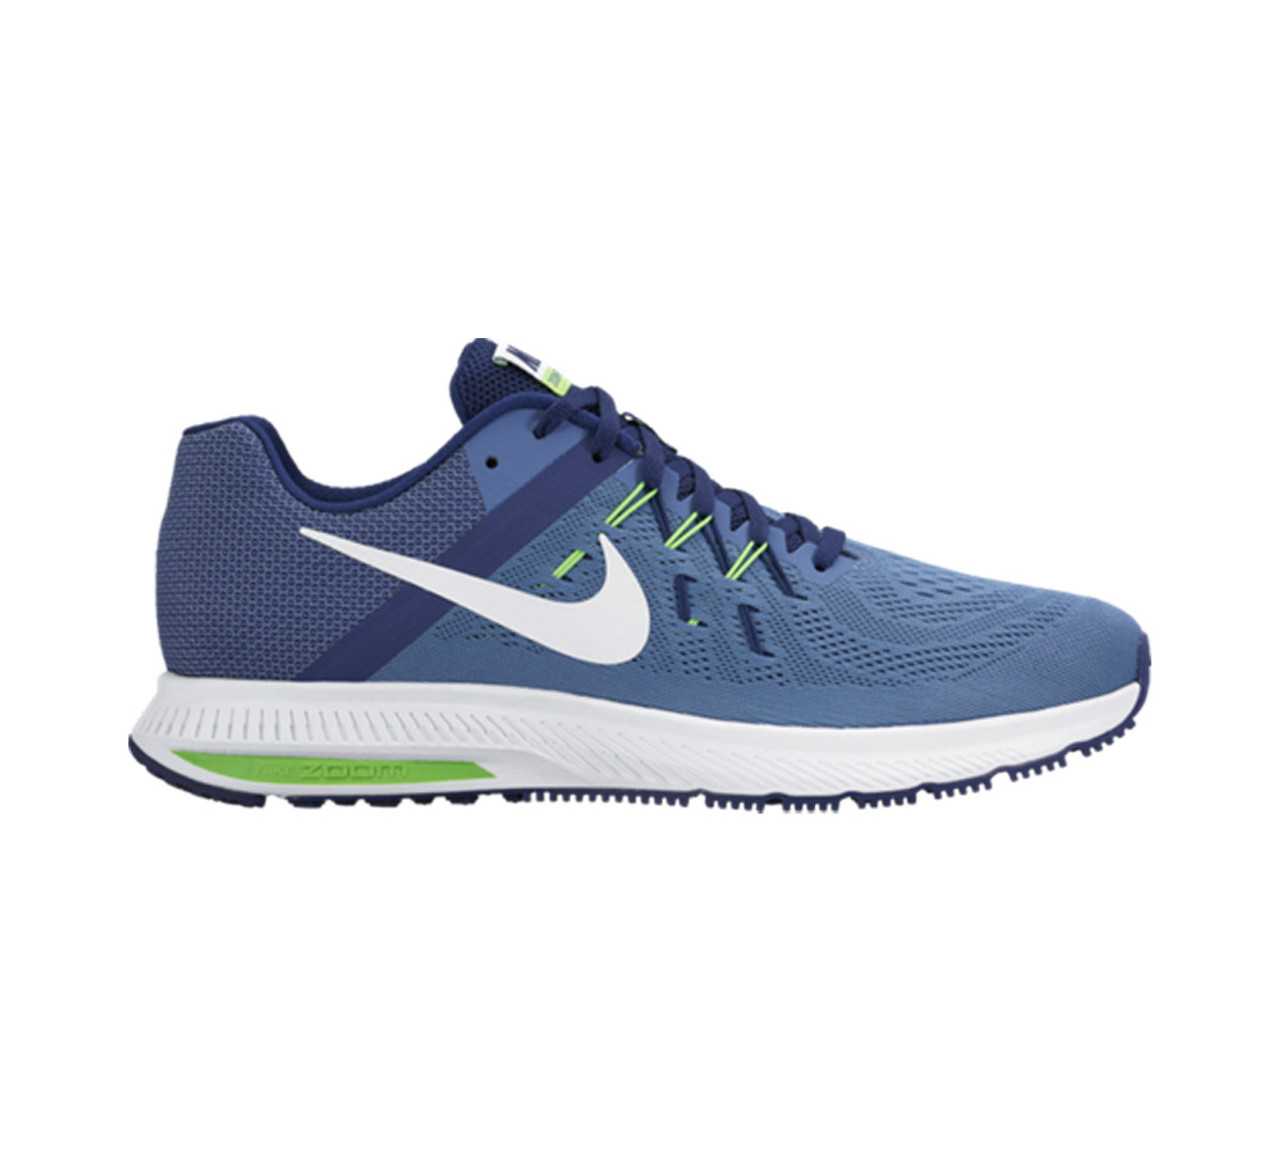 Nike Men's Zoom Winflo 2 Running Shoe - Blue | Discount Men's Athletic & More - Shoolu.com | Shoolu.com